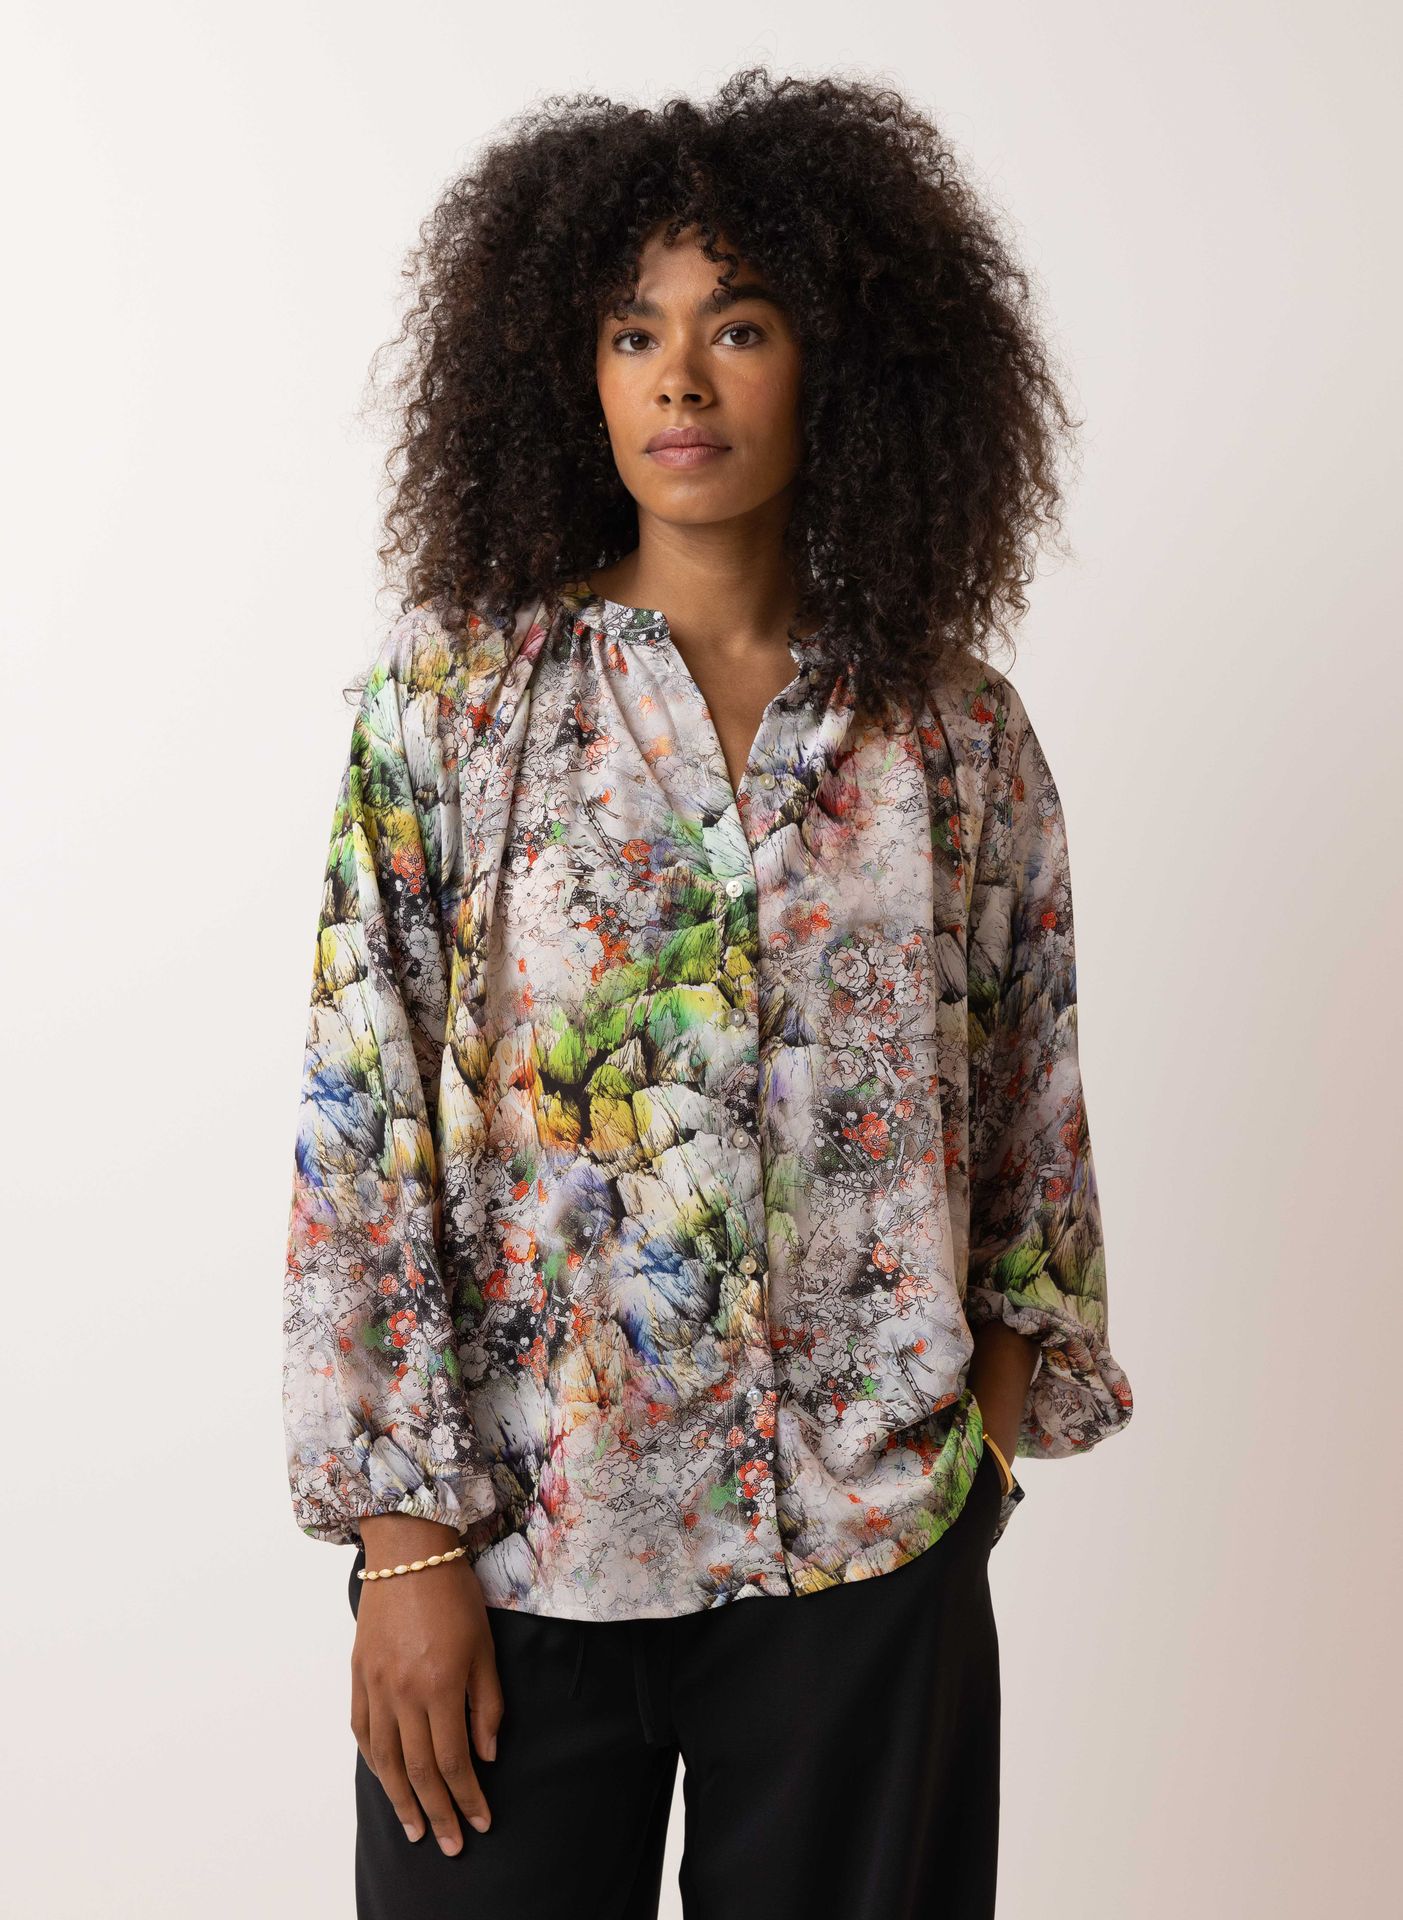 Norah Meerkleurige blouse multicolor 214418-002